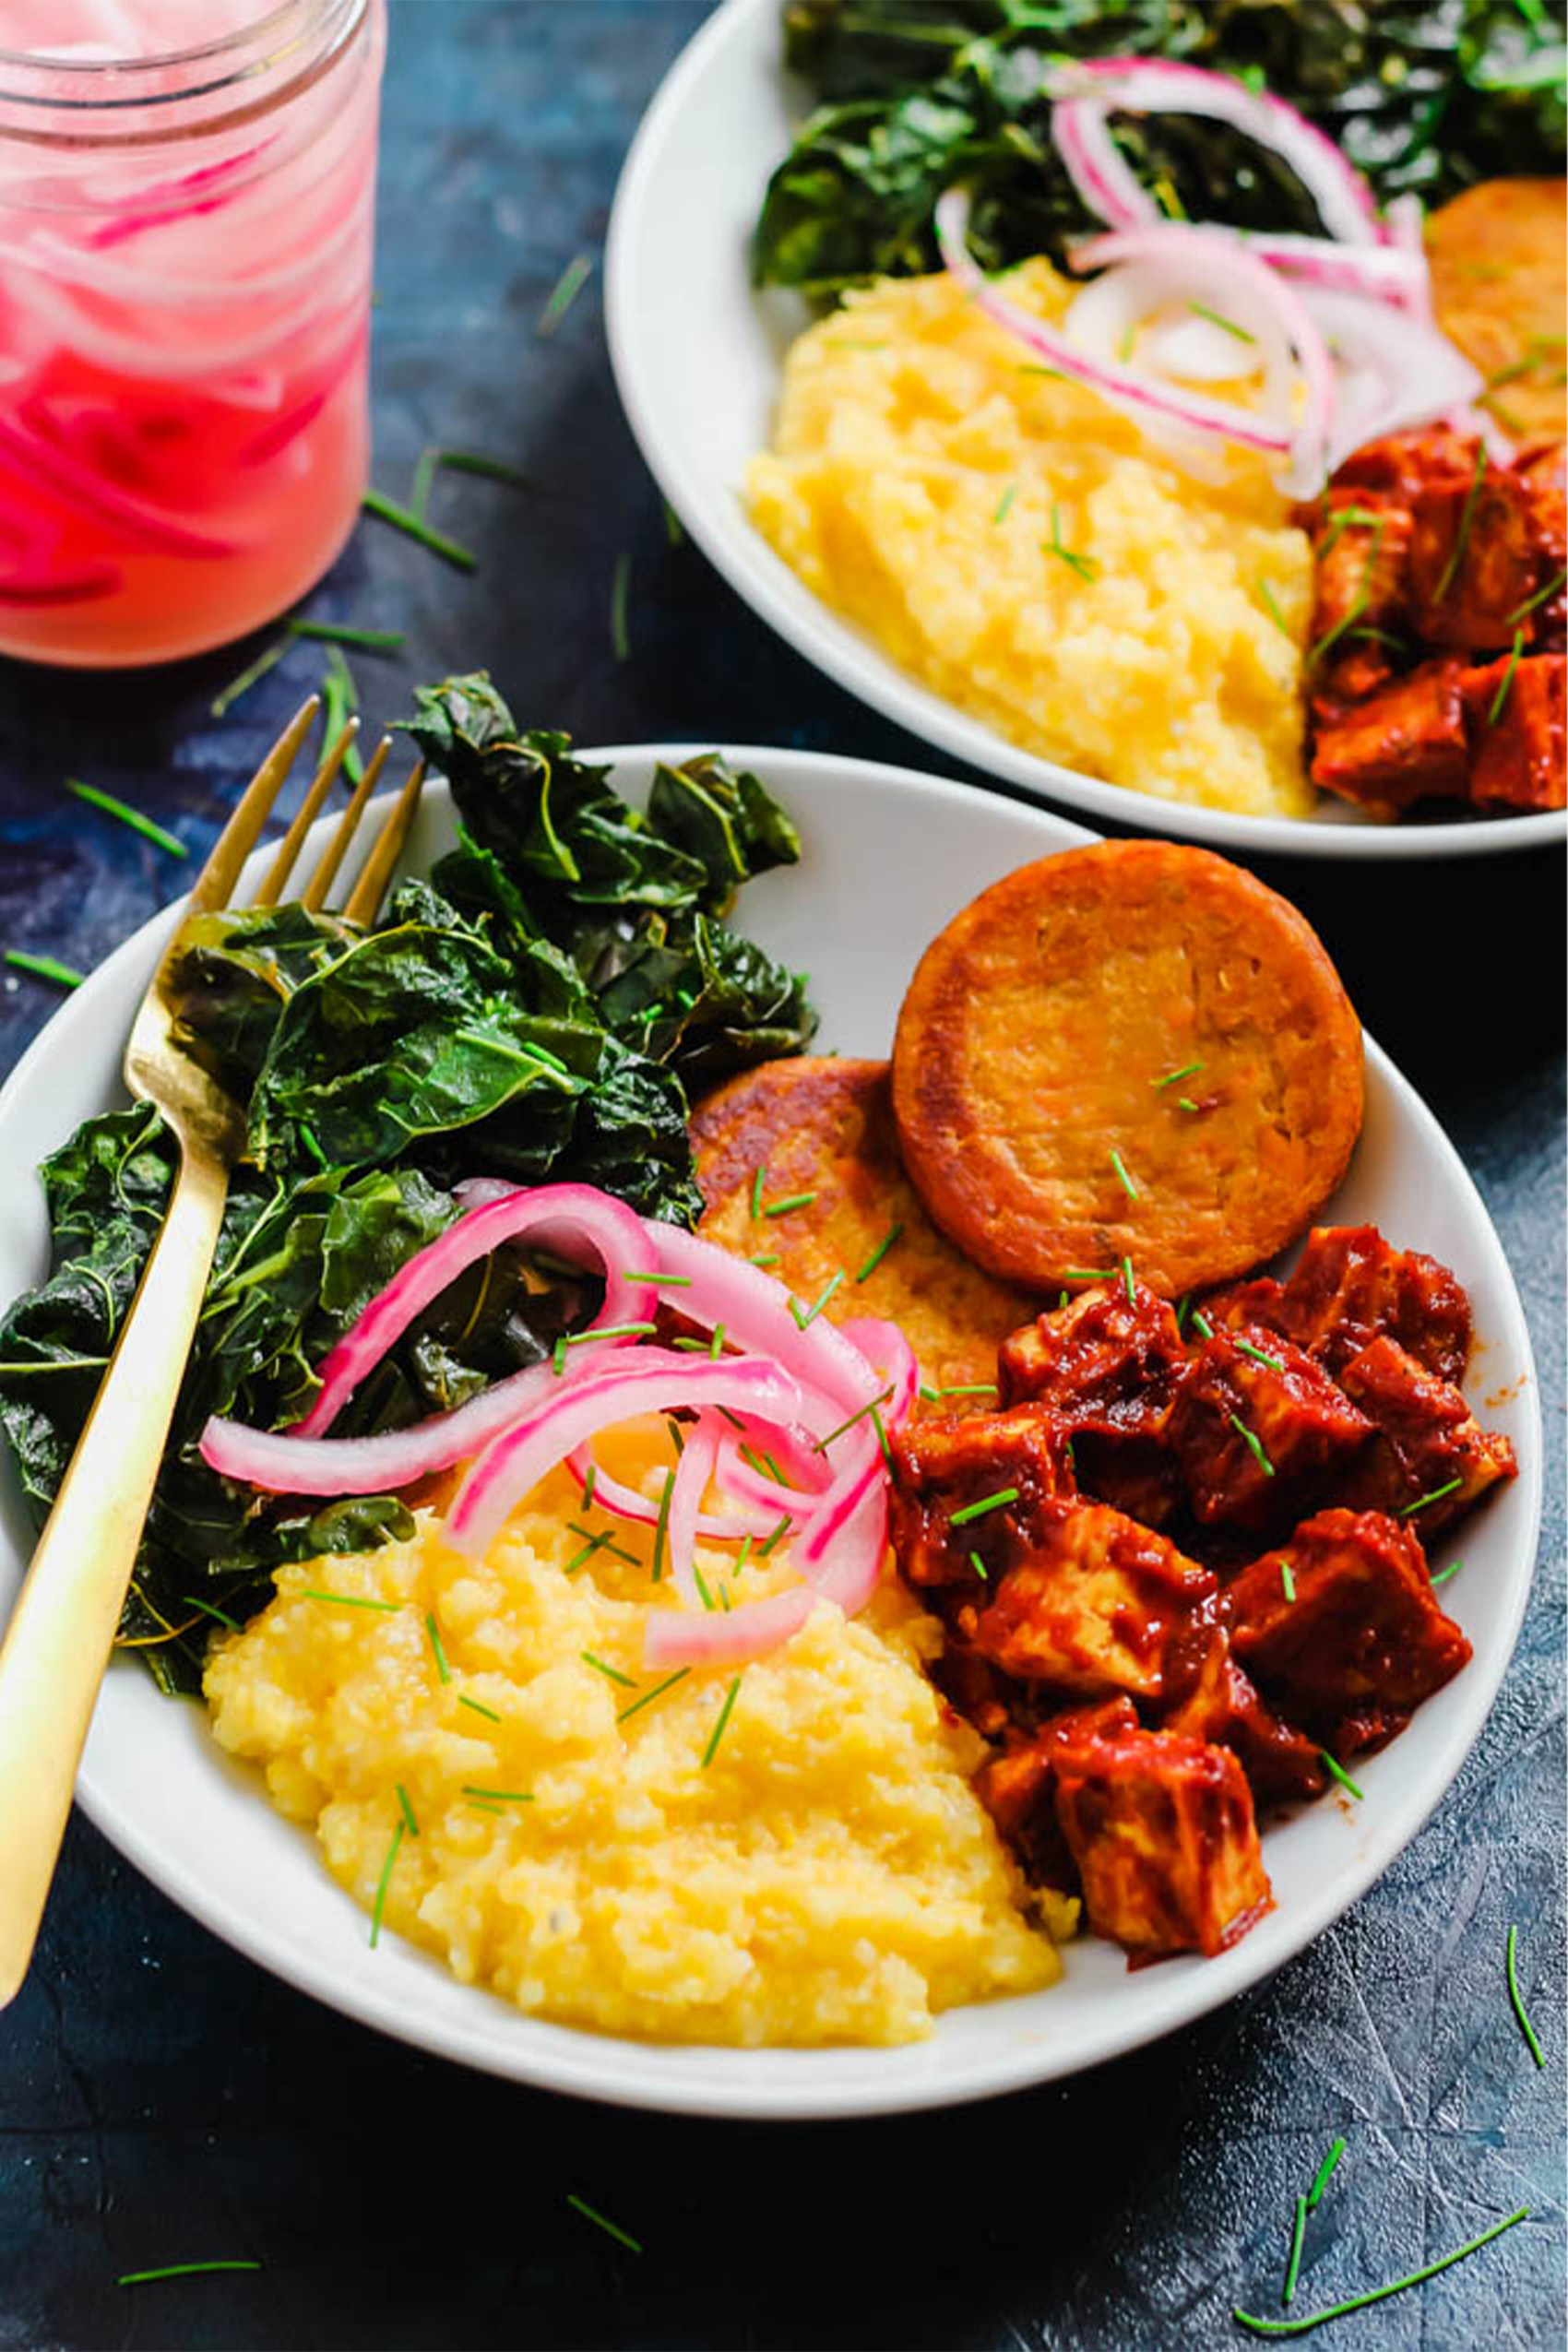 southern inspired bowls with vegan grits, bbq tofu, collard greens and sweet potato patties